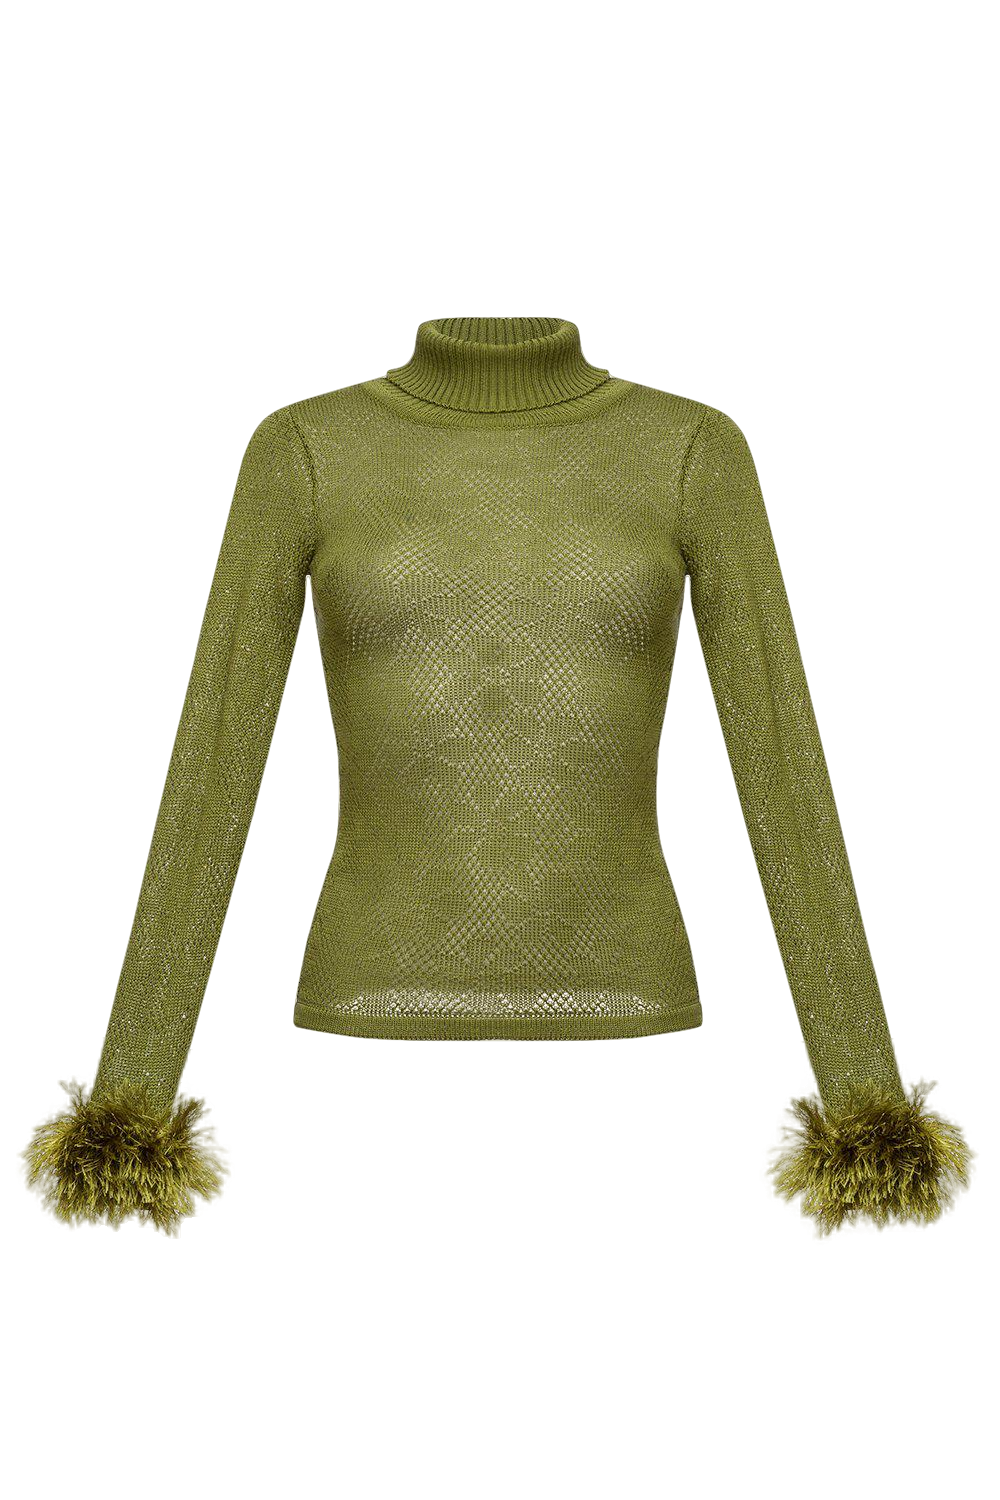 Green knit turtleneck with handmade knit details von ANDREEVA